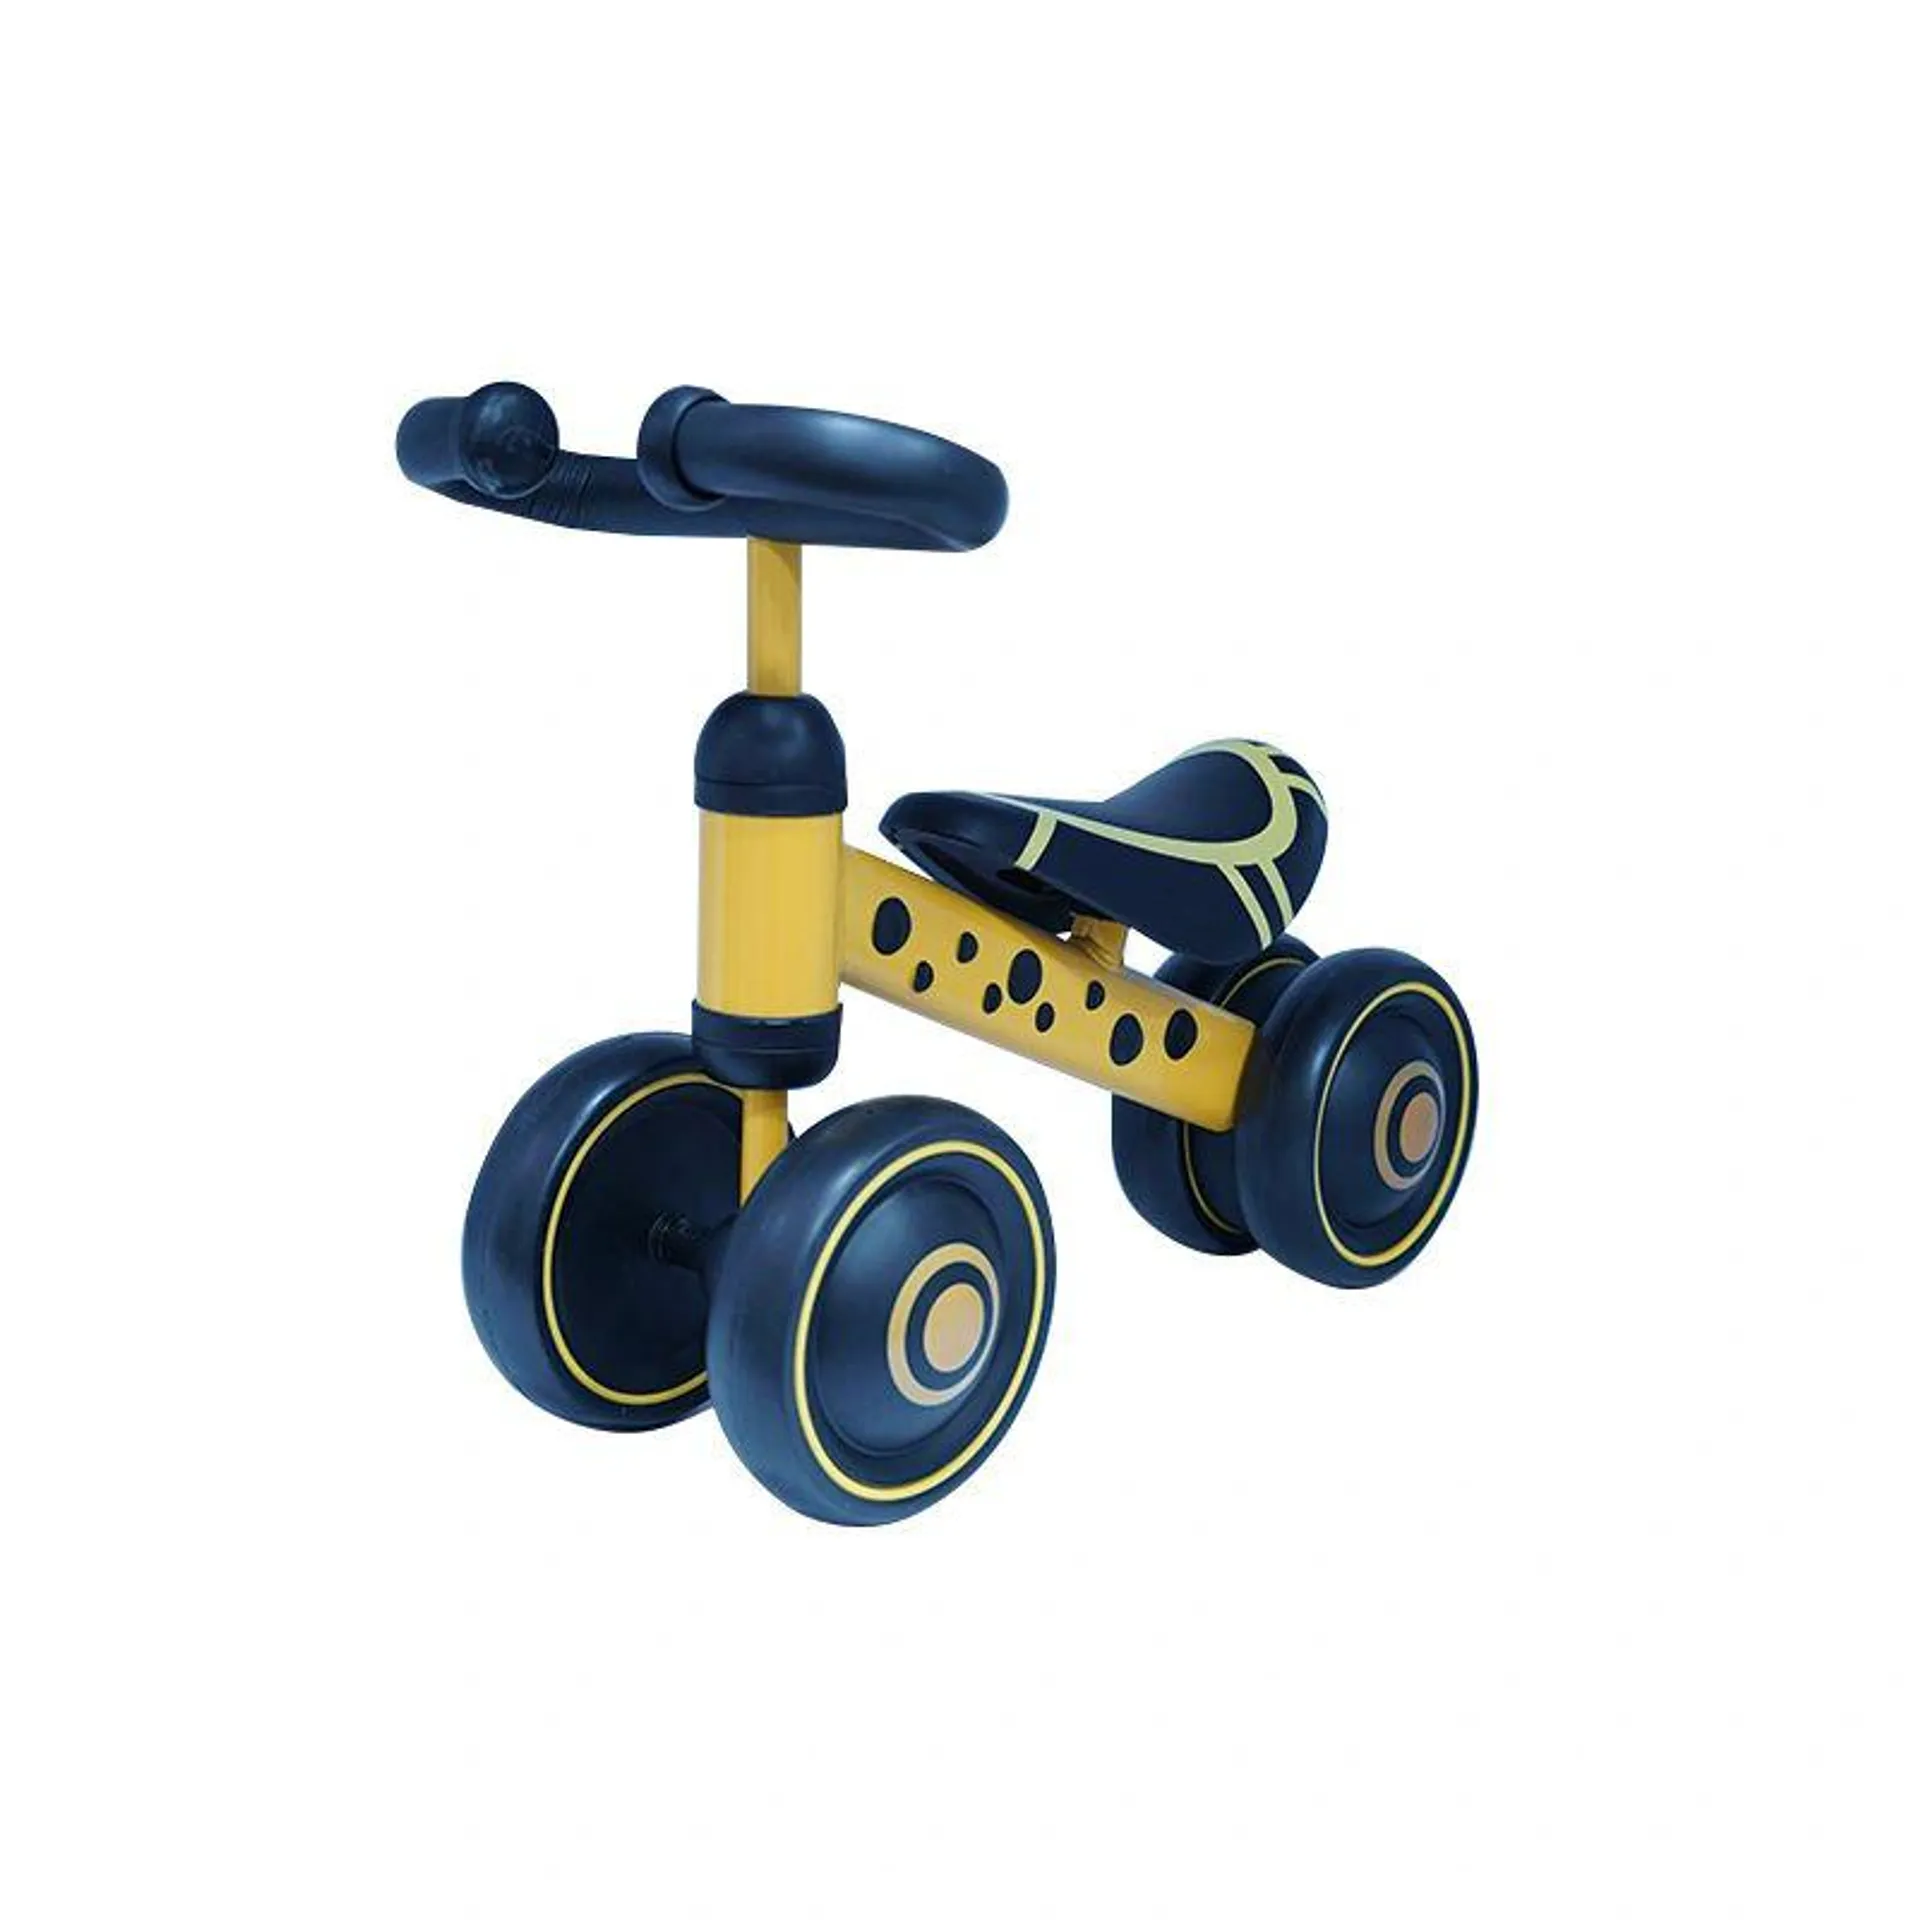 Bici de Balance para Niños Mini Balance Bike BM Toys